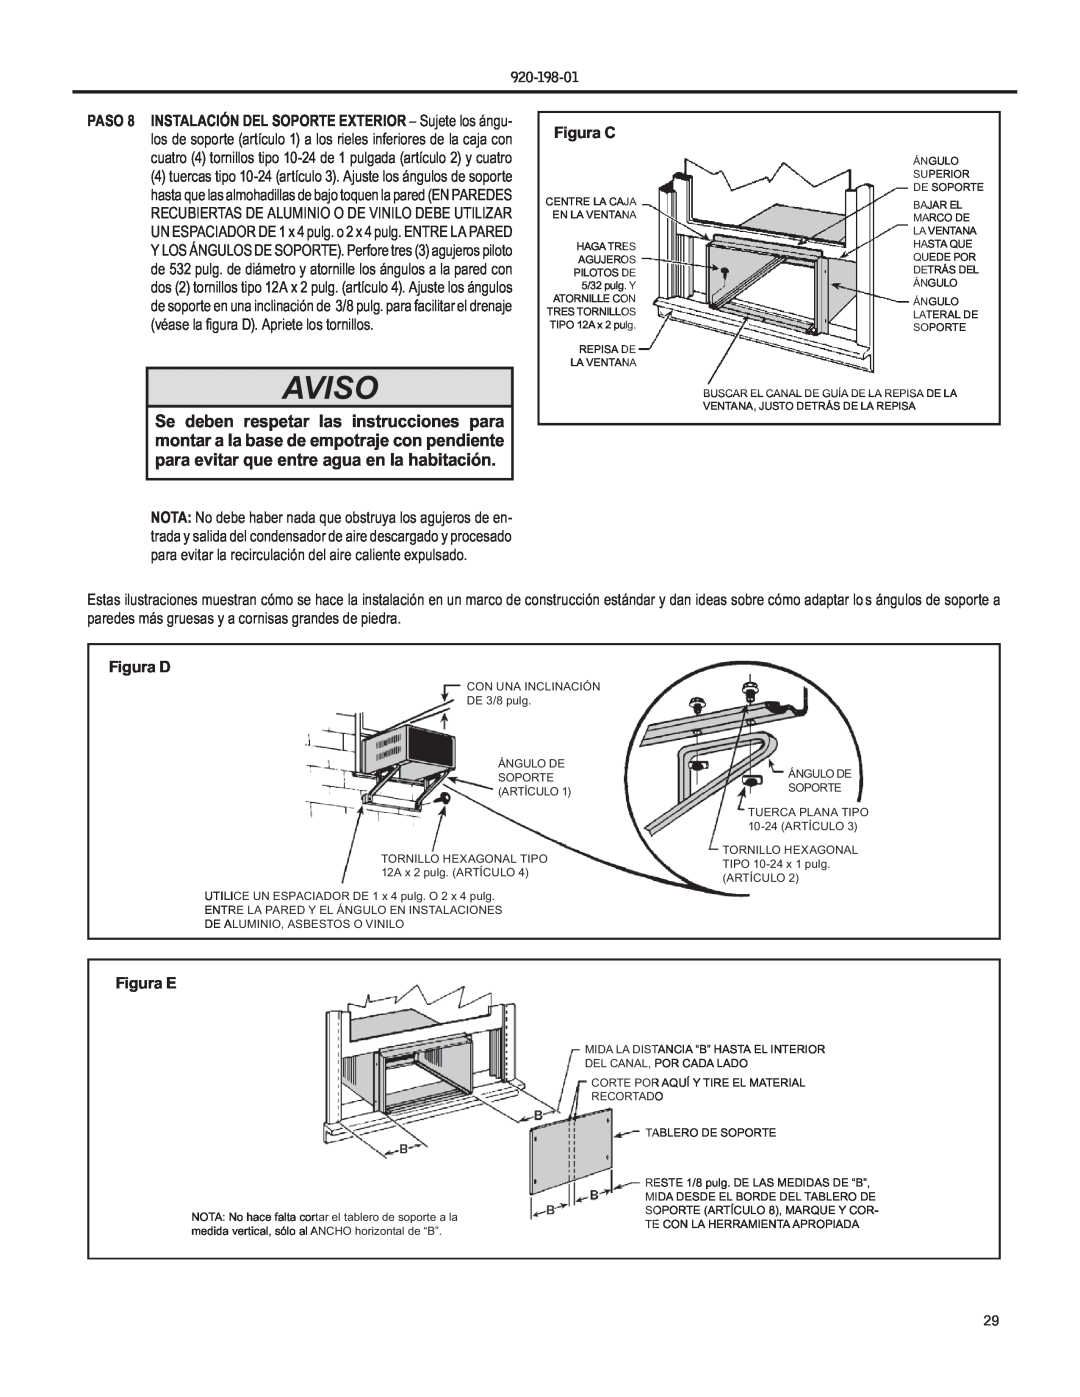 Friedrich YS09 operation manual Aviso, Figura C, Figura D, Figura E 